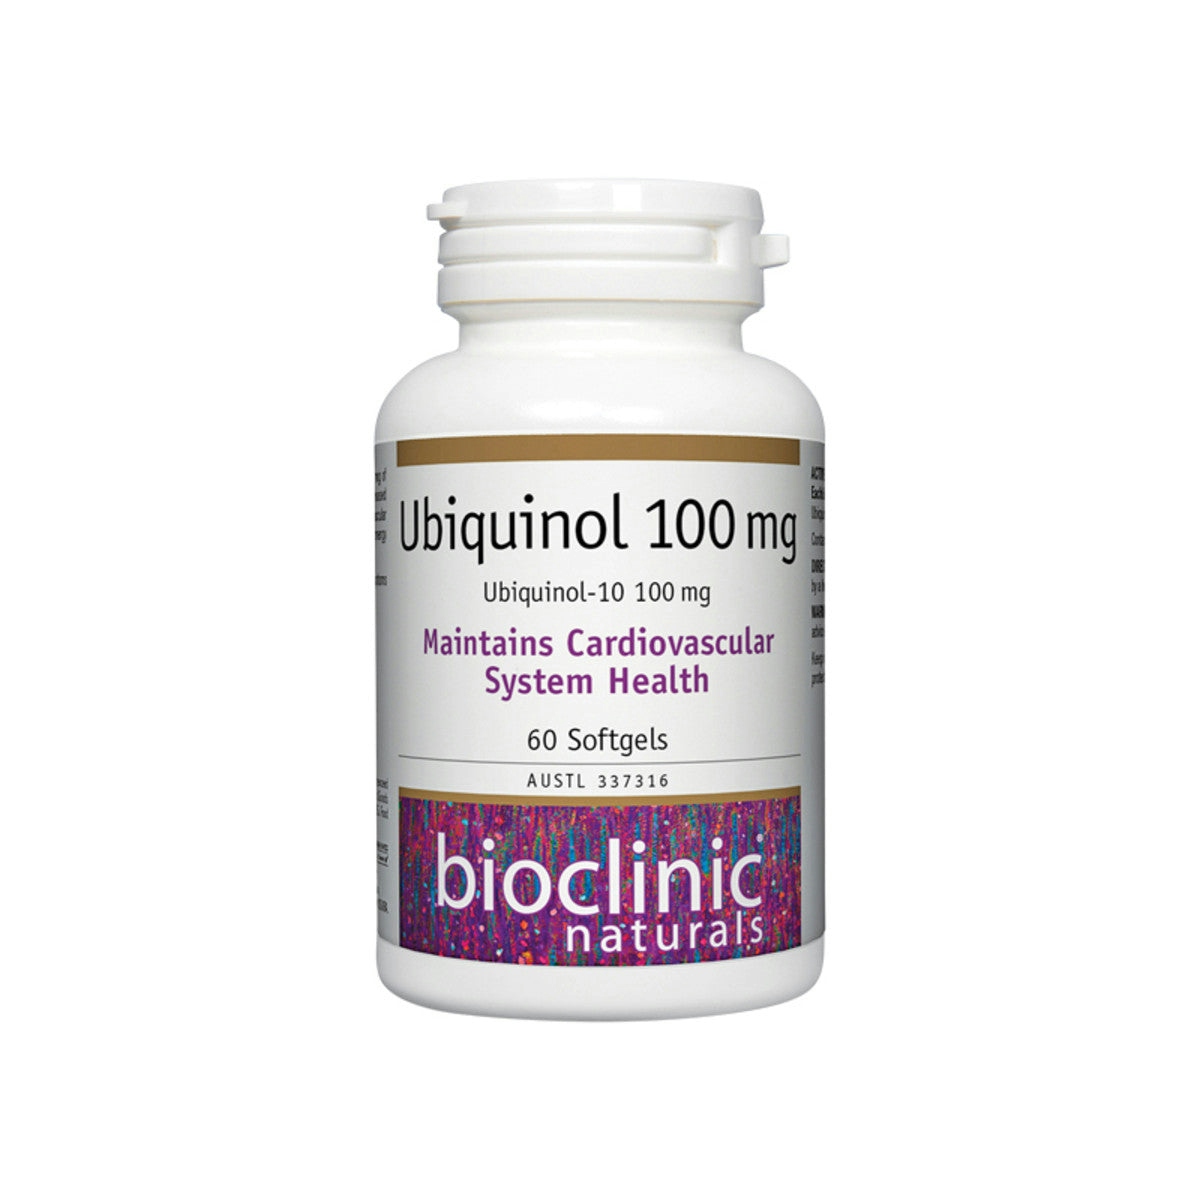 image of Bioclinic Naturals Ubiquinol 100mg 60c on white background 